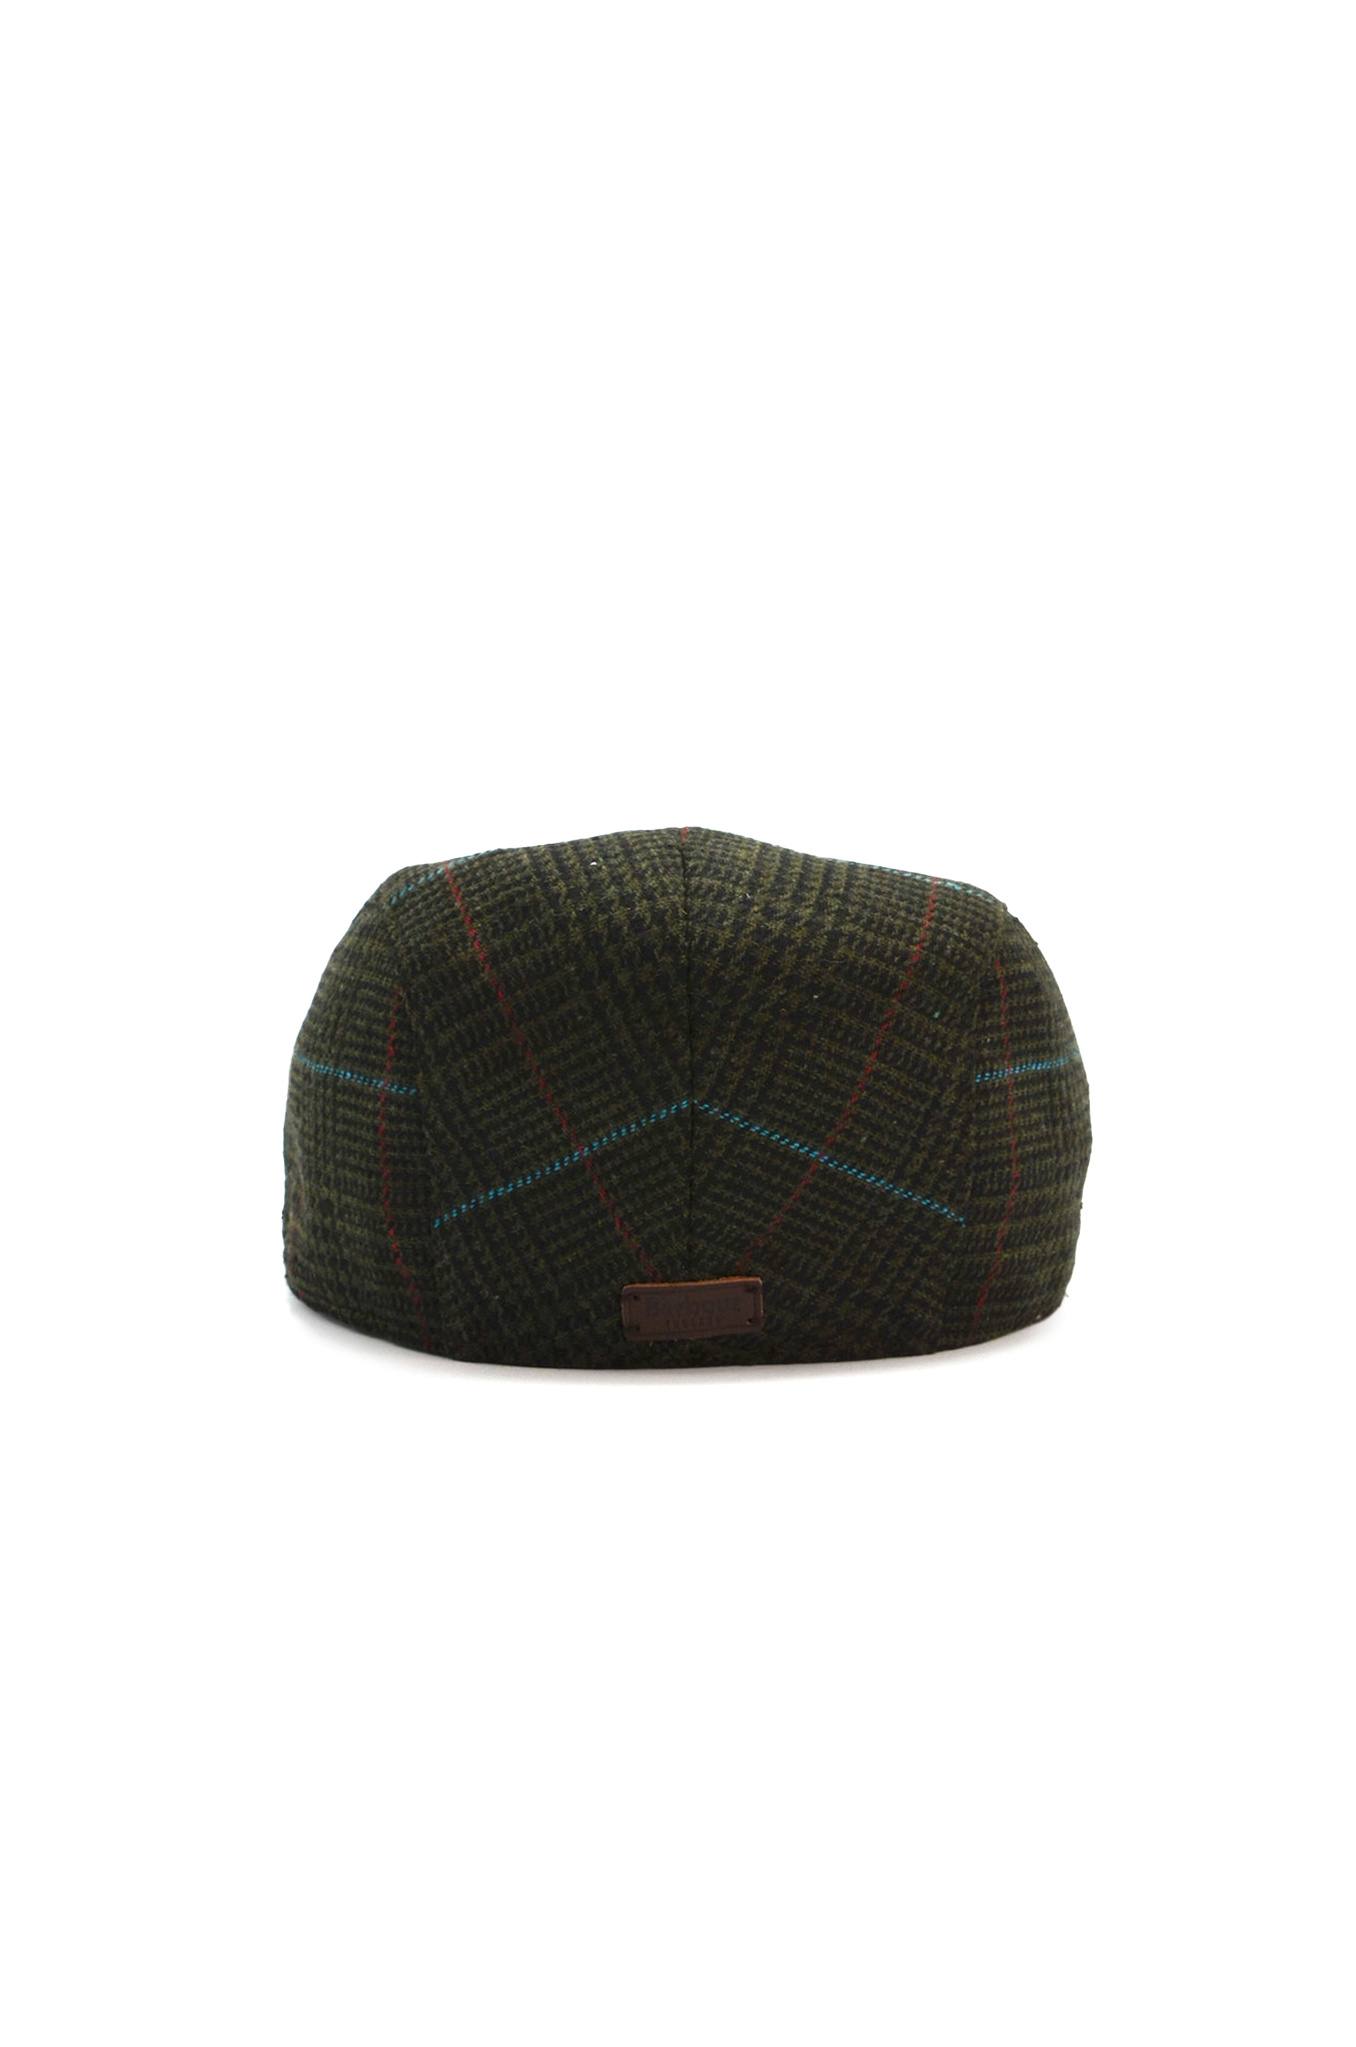 TWEED FLAT CAP IN GREEN-7